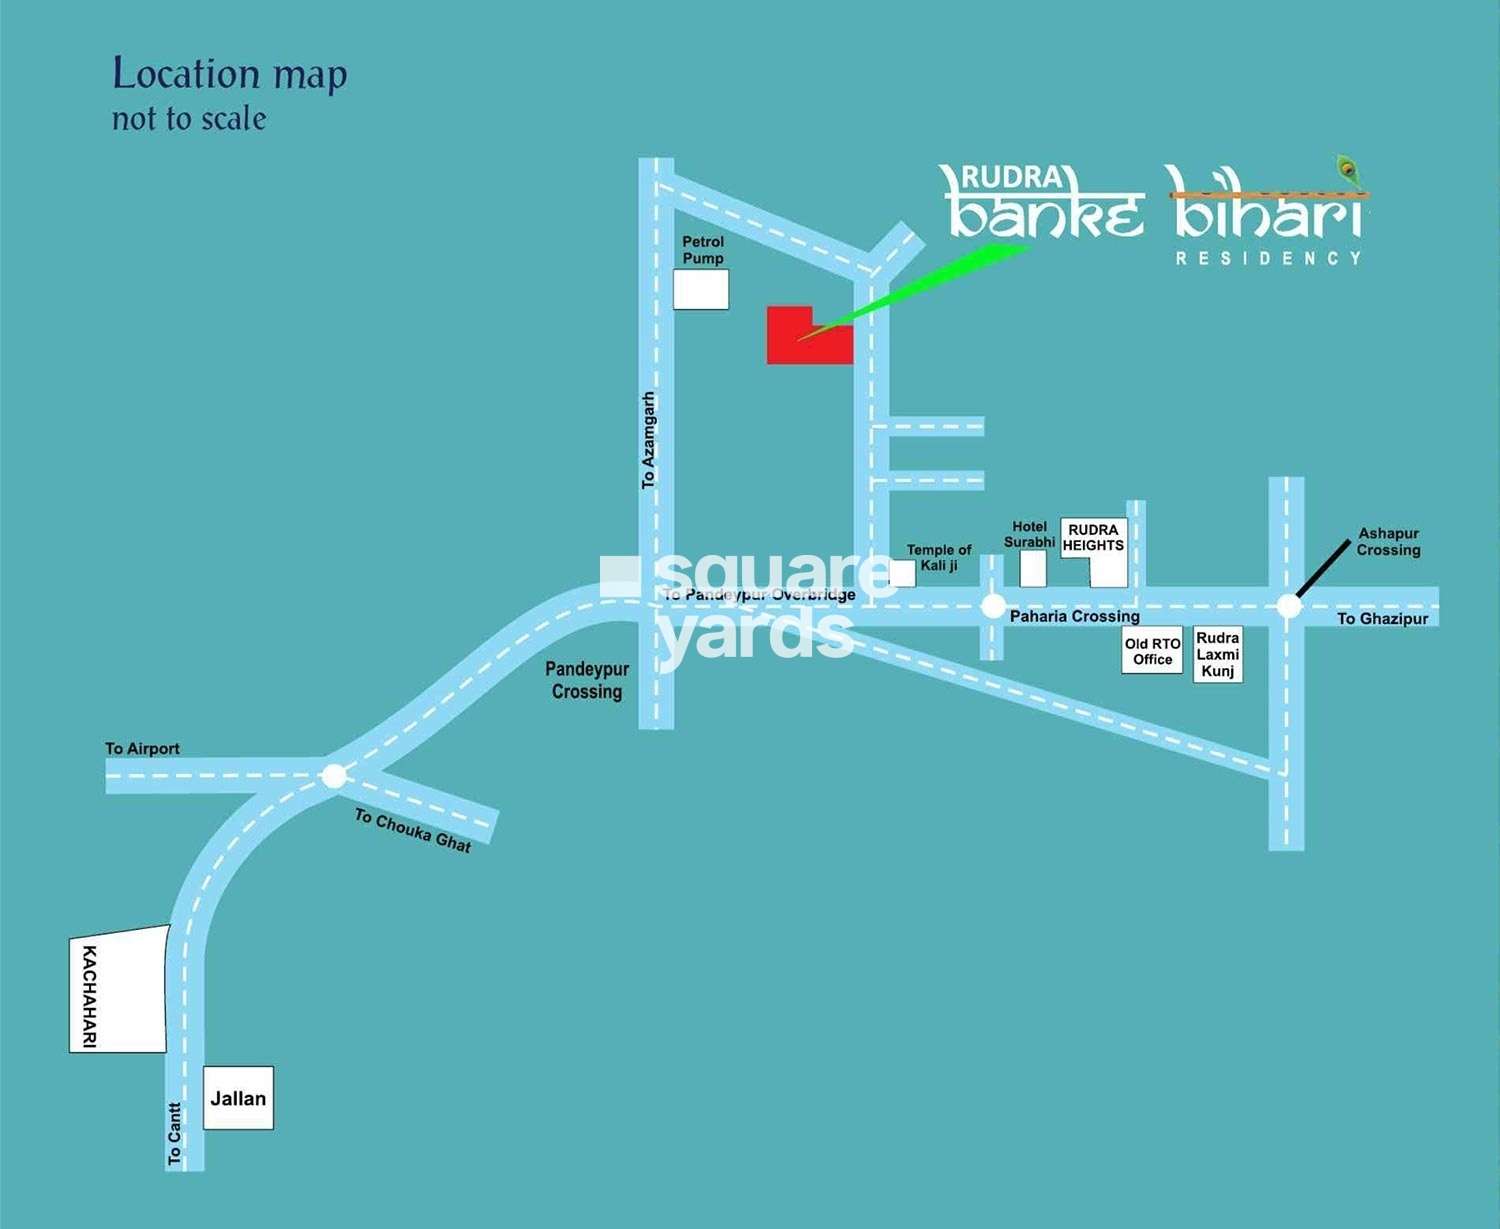 rudra banke bihari residency project location image1